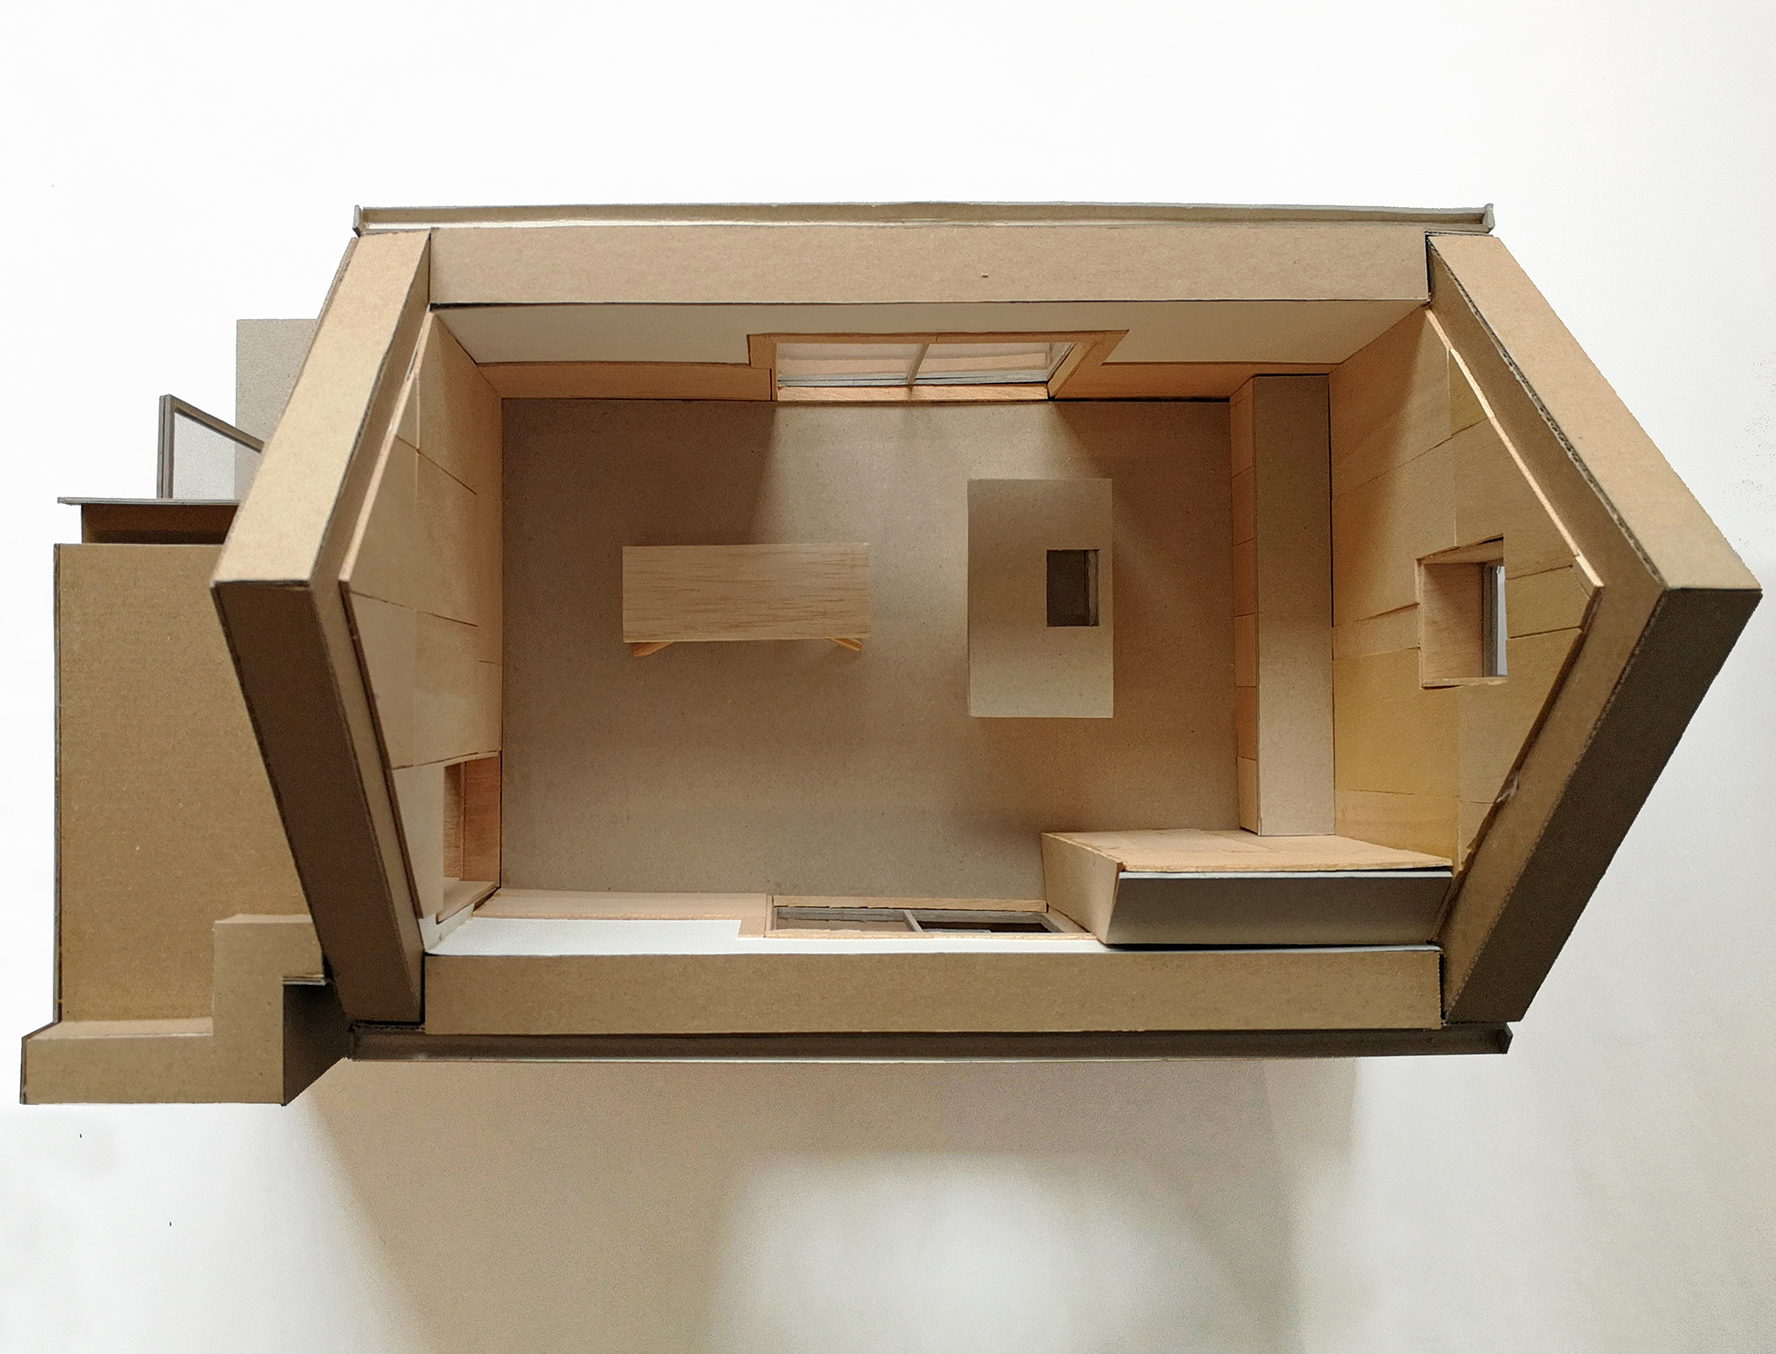 harper-perry-architects-barn-conversion-model-development-internal-layout-open-kitchen-plan